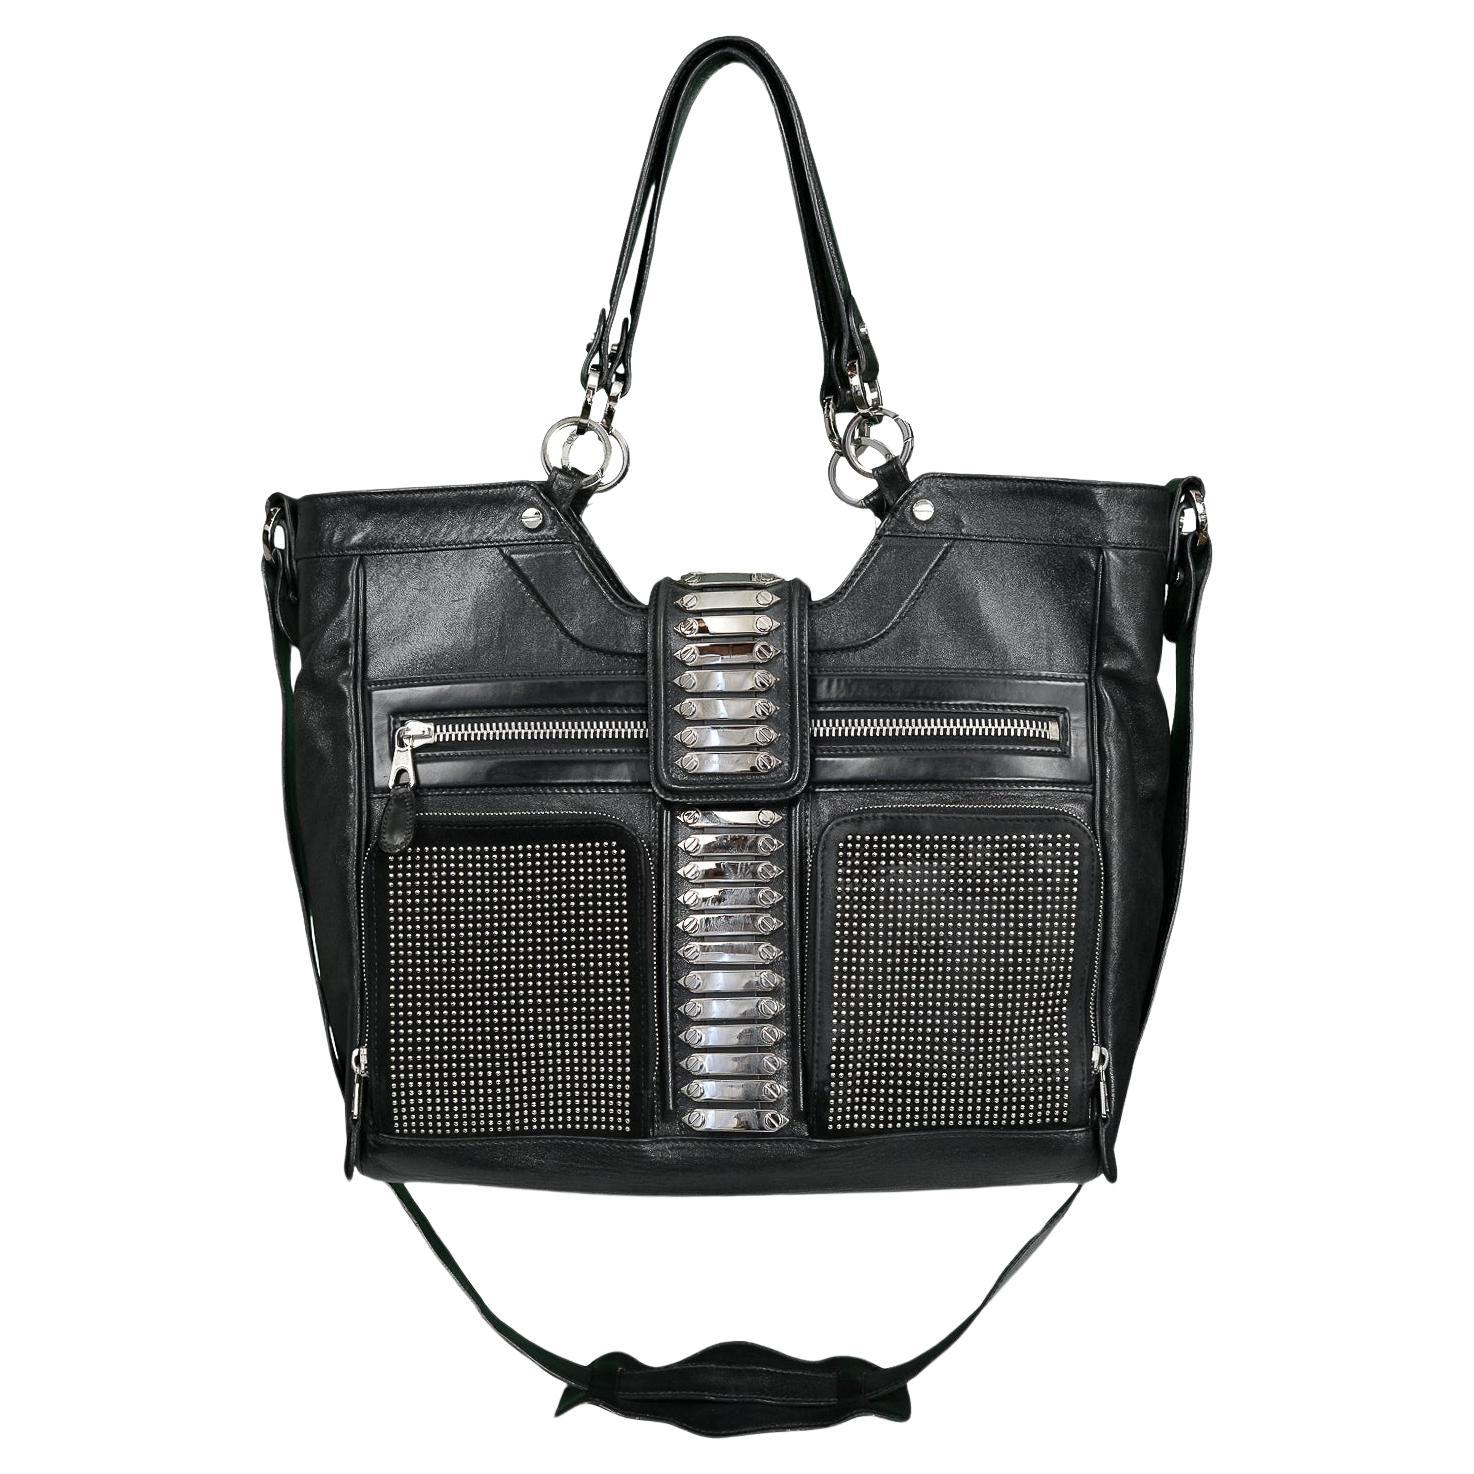 Balenciaga by Nicolas Ghesquiere Black Leather & Studded Chrome Bag 2007 For Sale